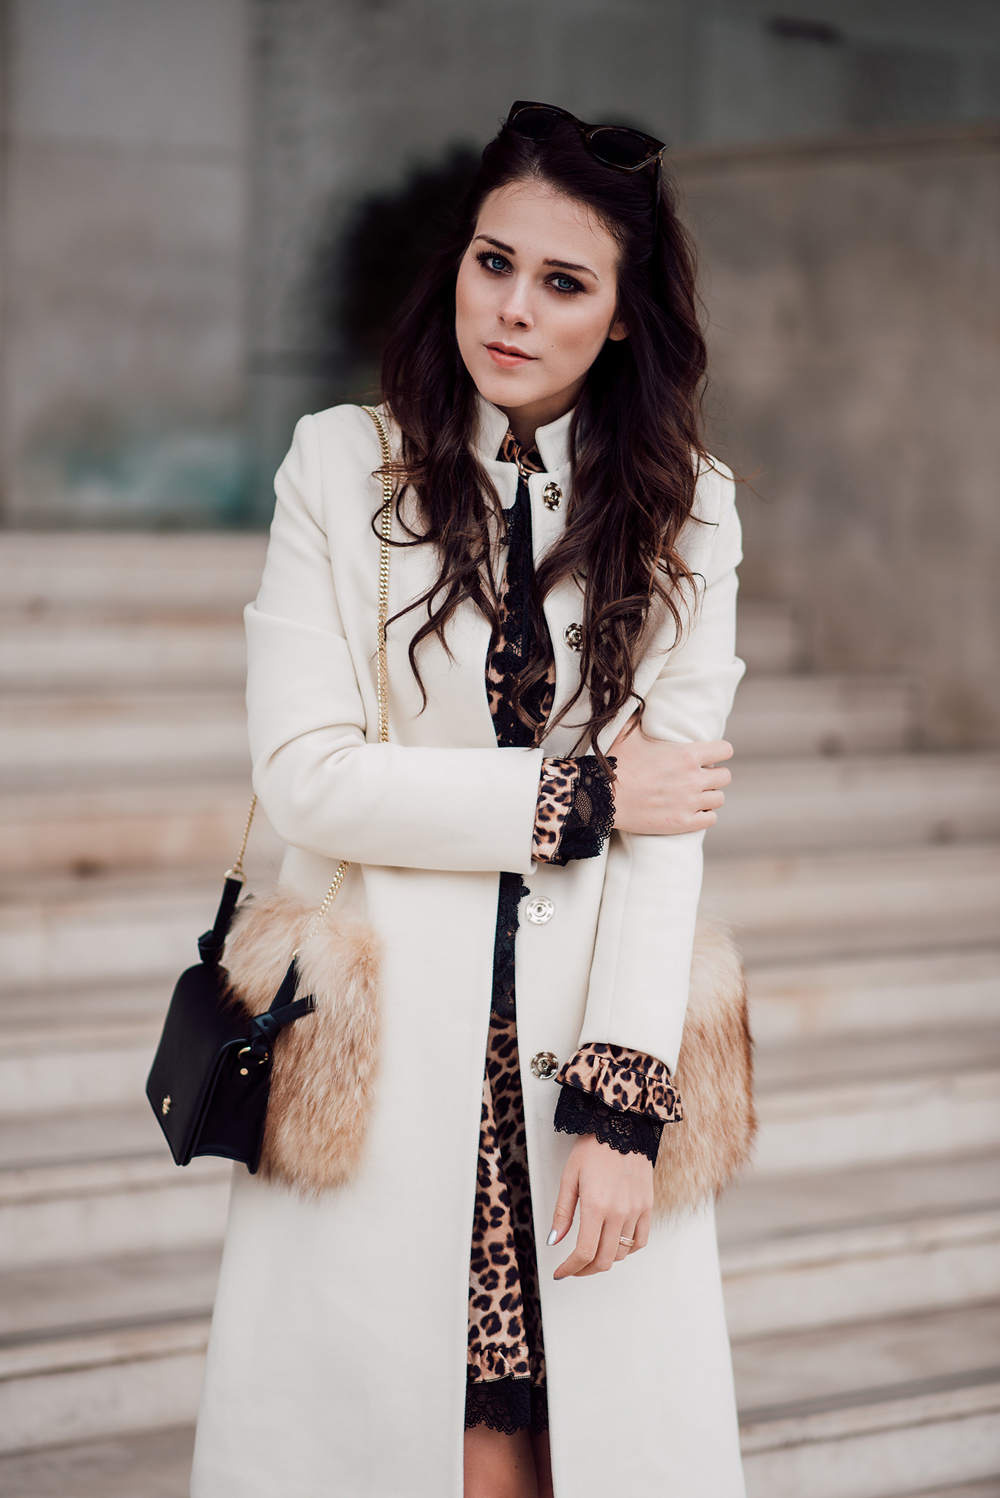 eva-ahacevcic_love-eva_terminal3_ootd_leopard-print_dress_fashion-blogger